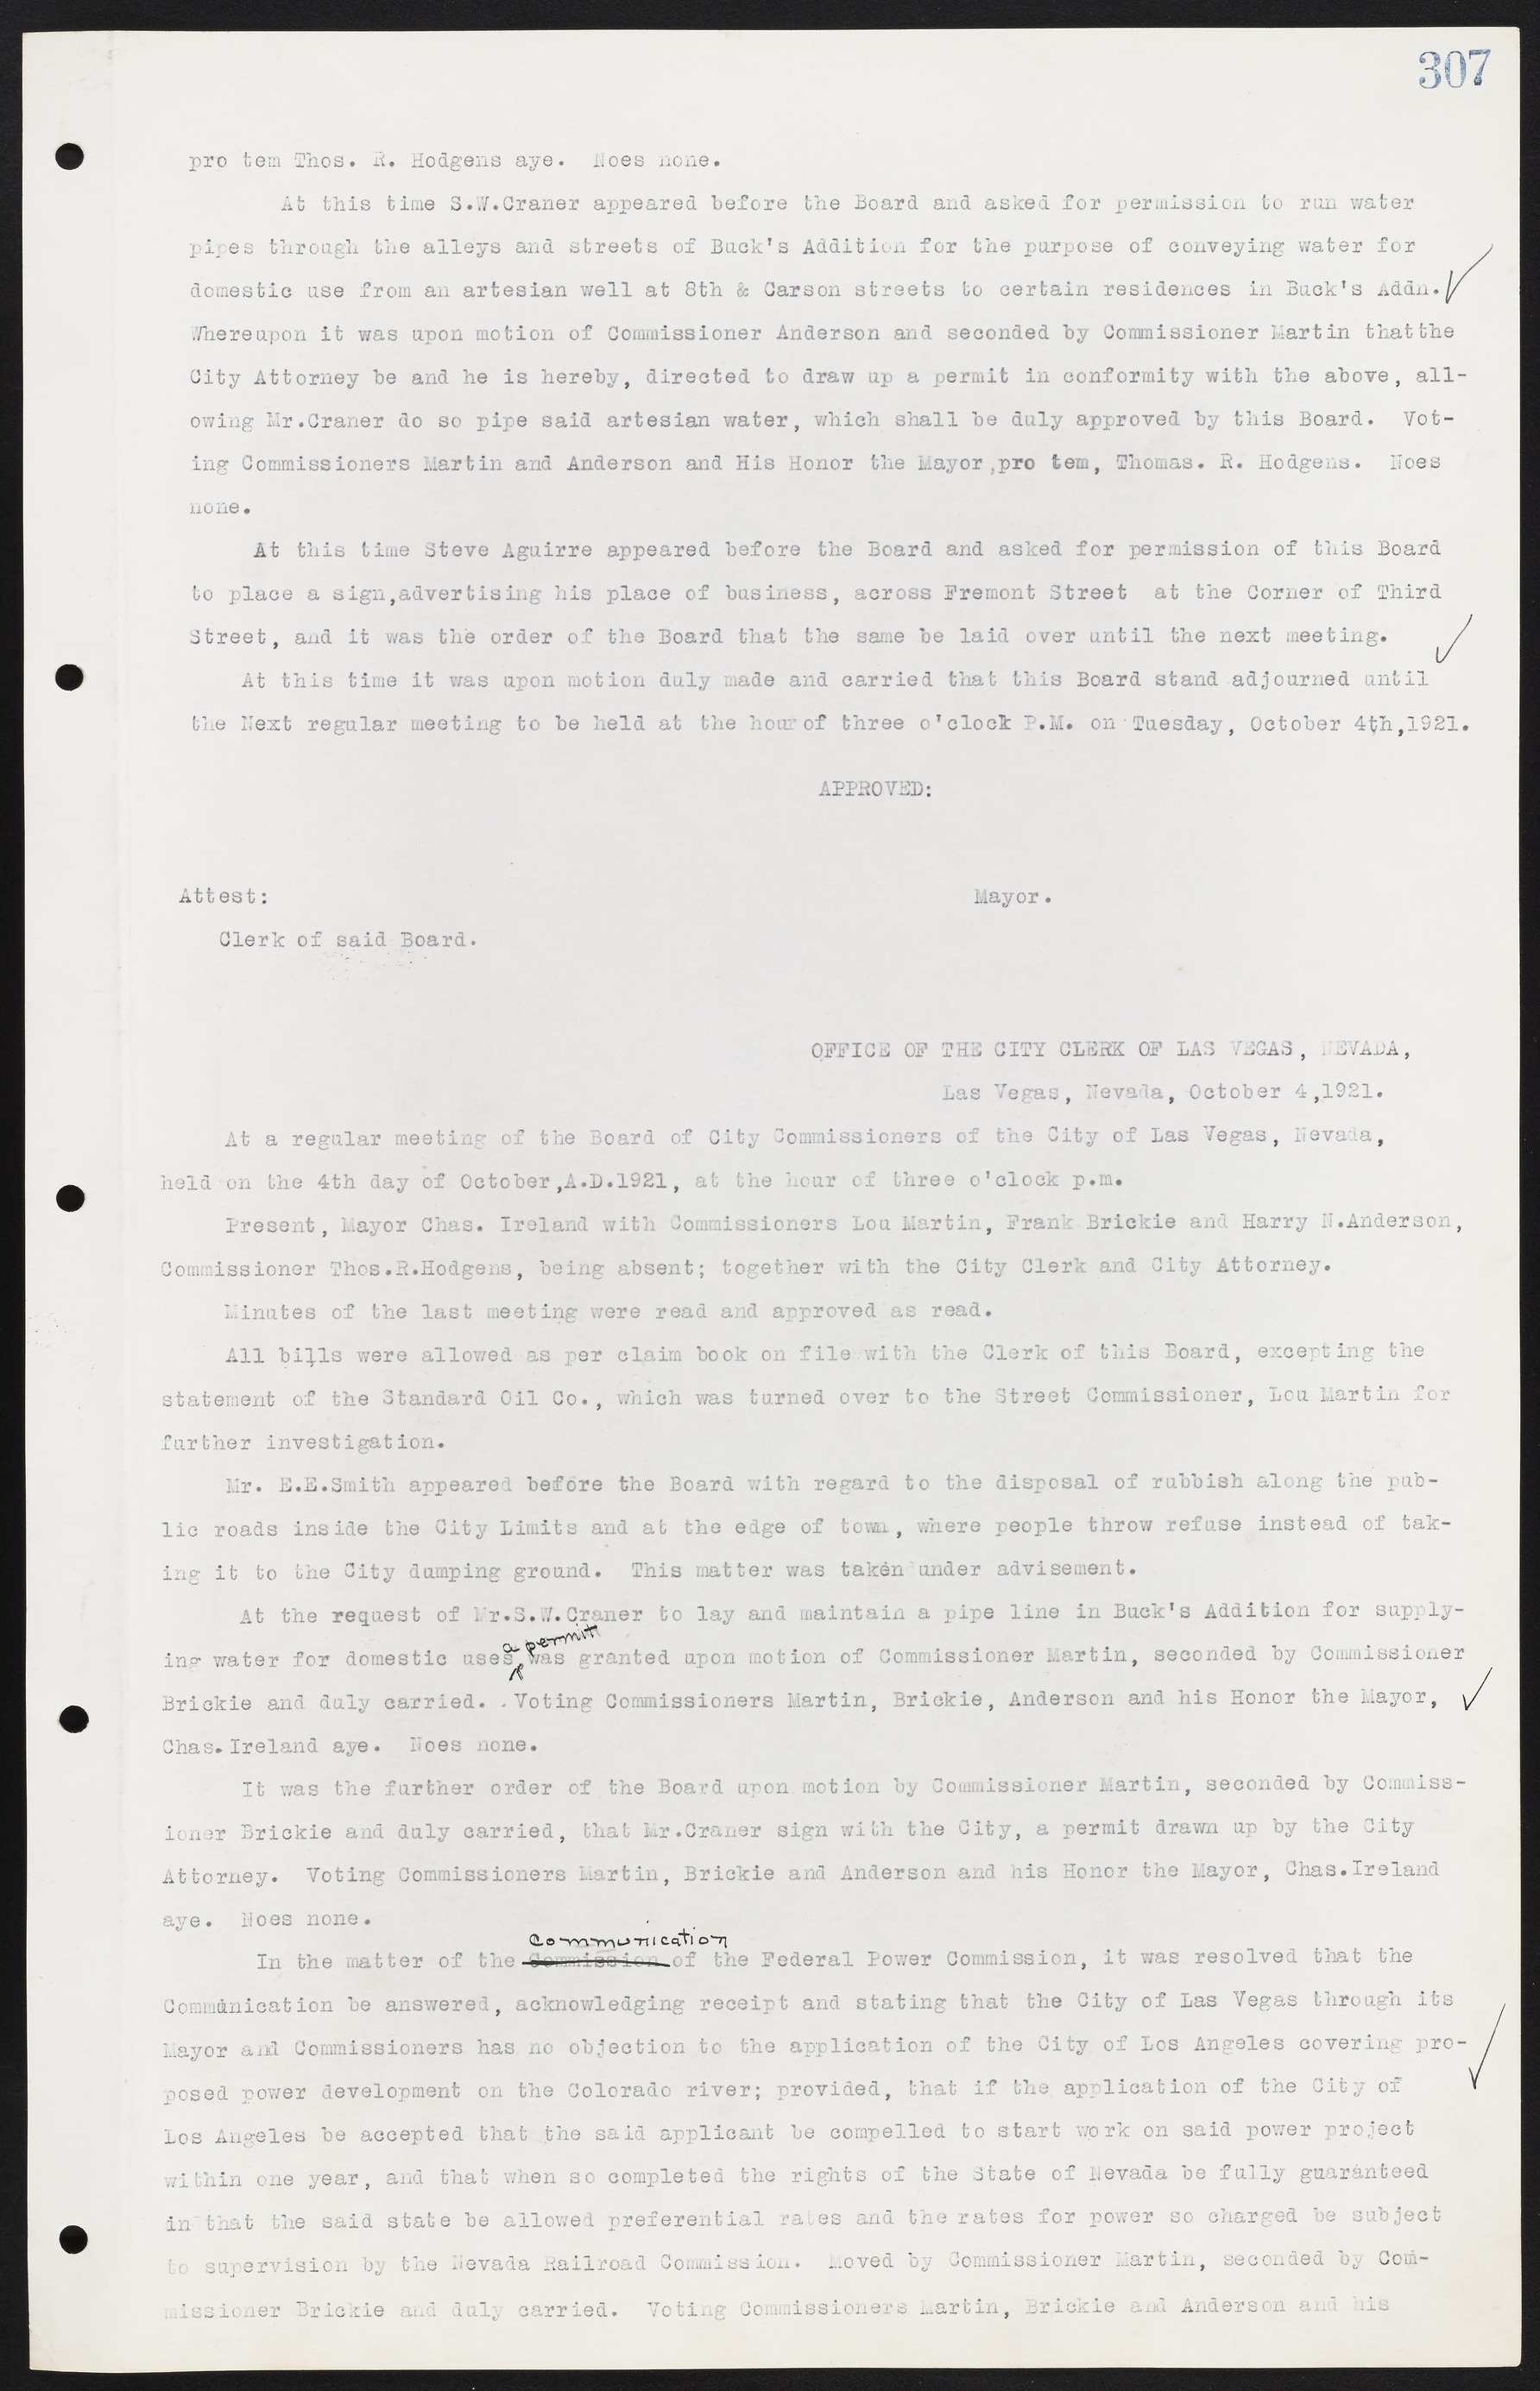 Las Vegas City Commission Minutes, June 22, 1911 to February 7, 1922, lvc000001-323